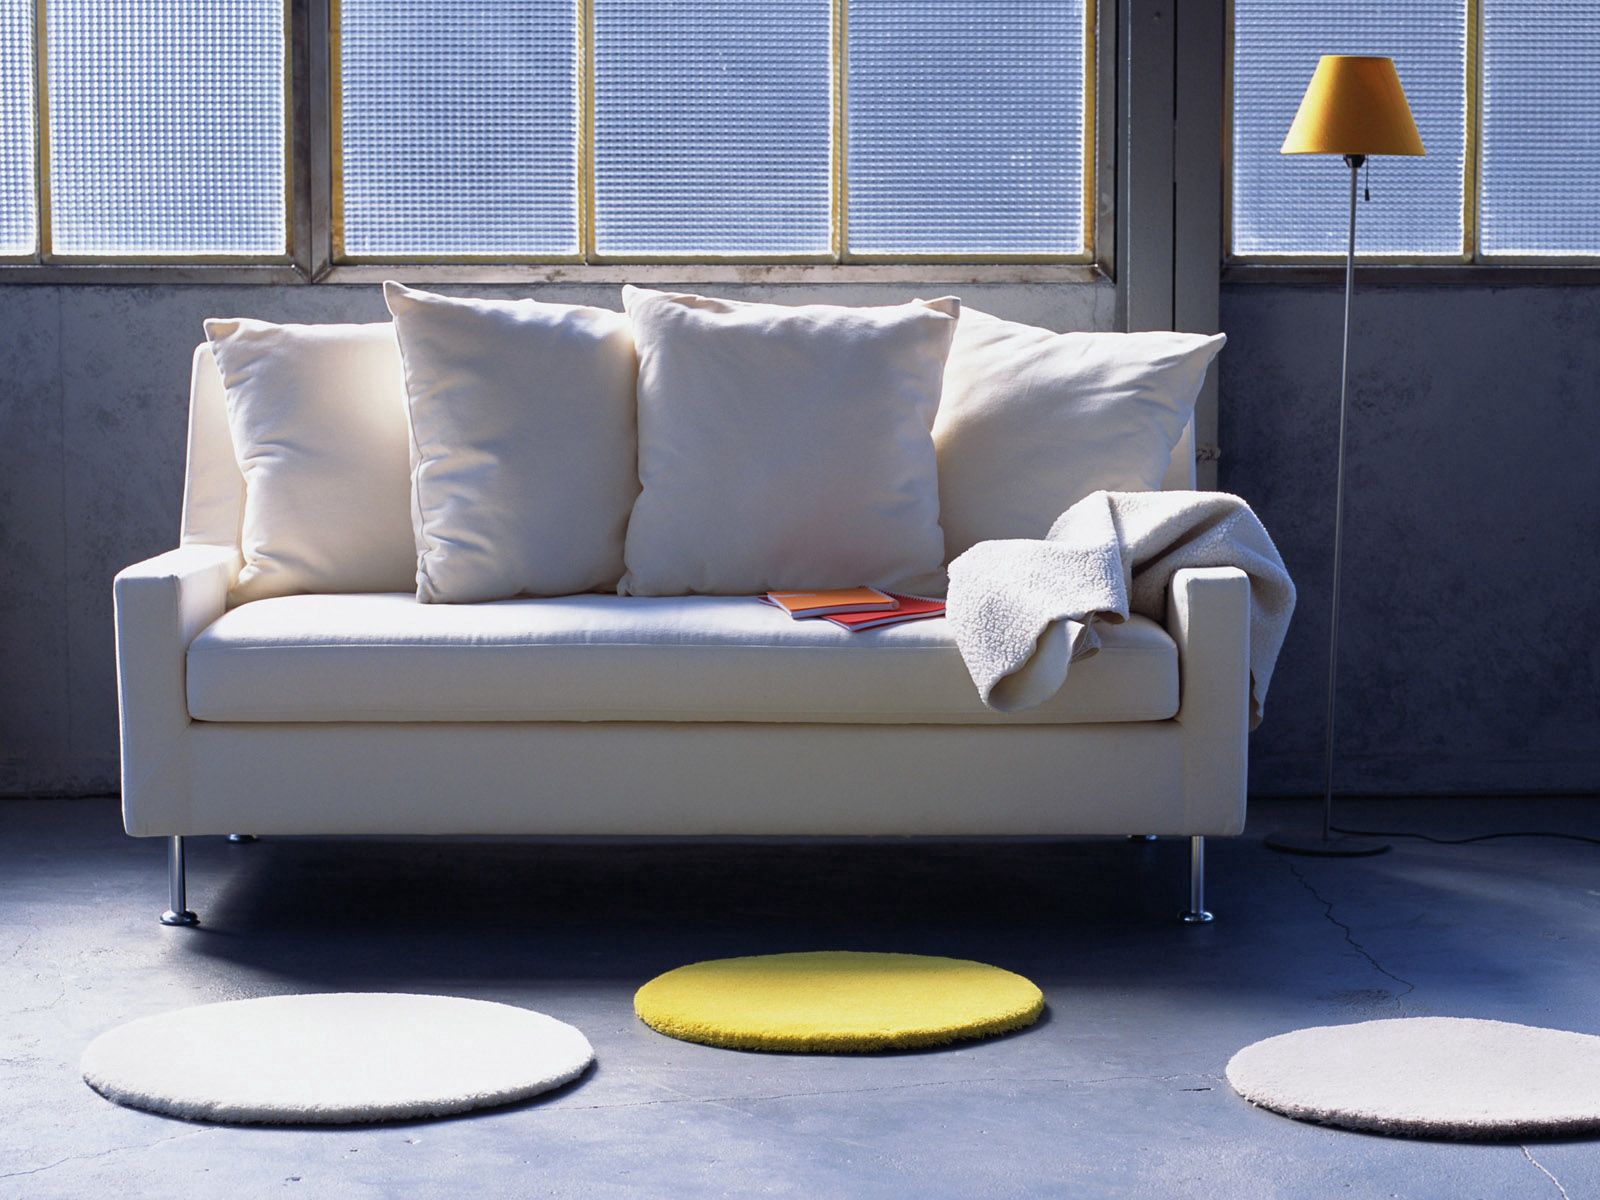 room, miscellanea, miscellaneous, design, lamp, window, sofa for android